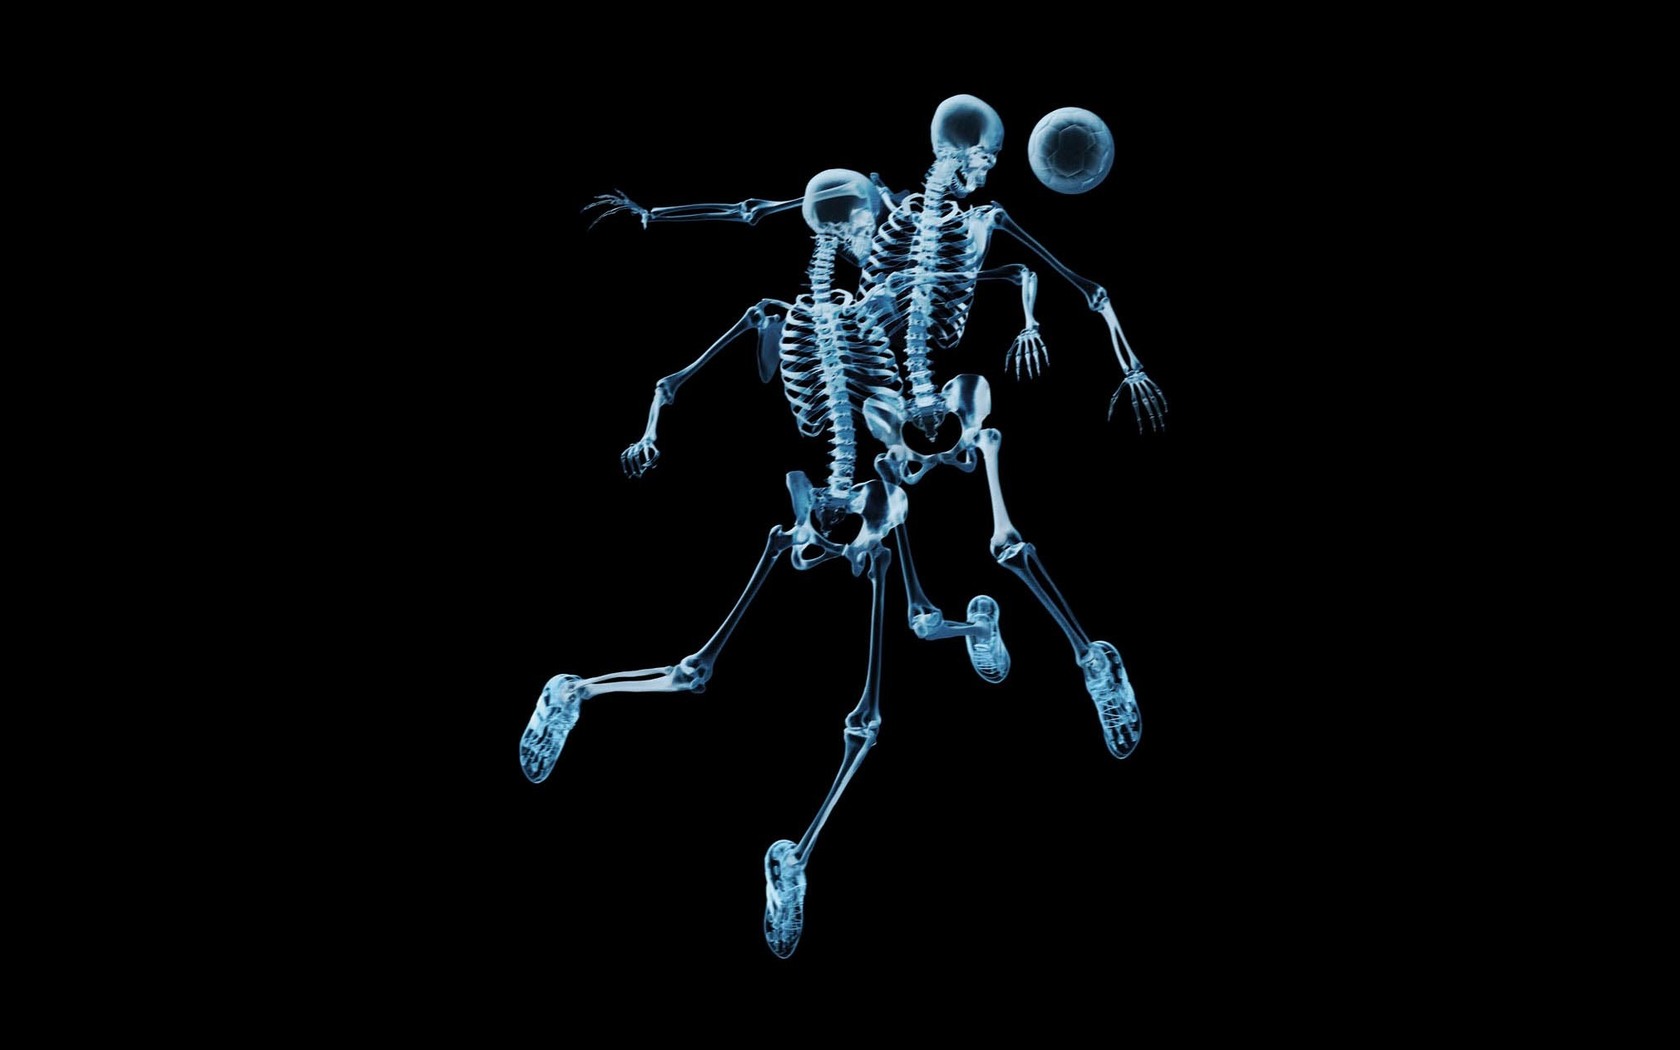 баскетбол рентген, текстура, фон, скачать фото, basketball x-ray texture background